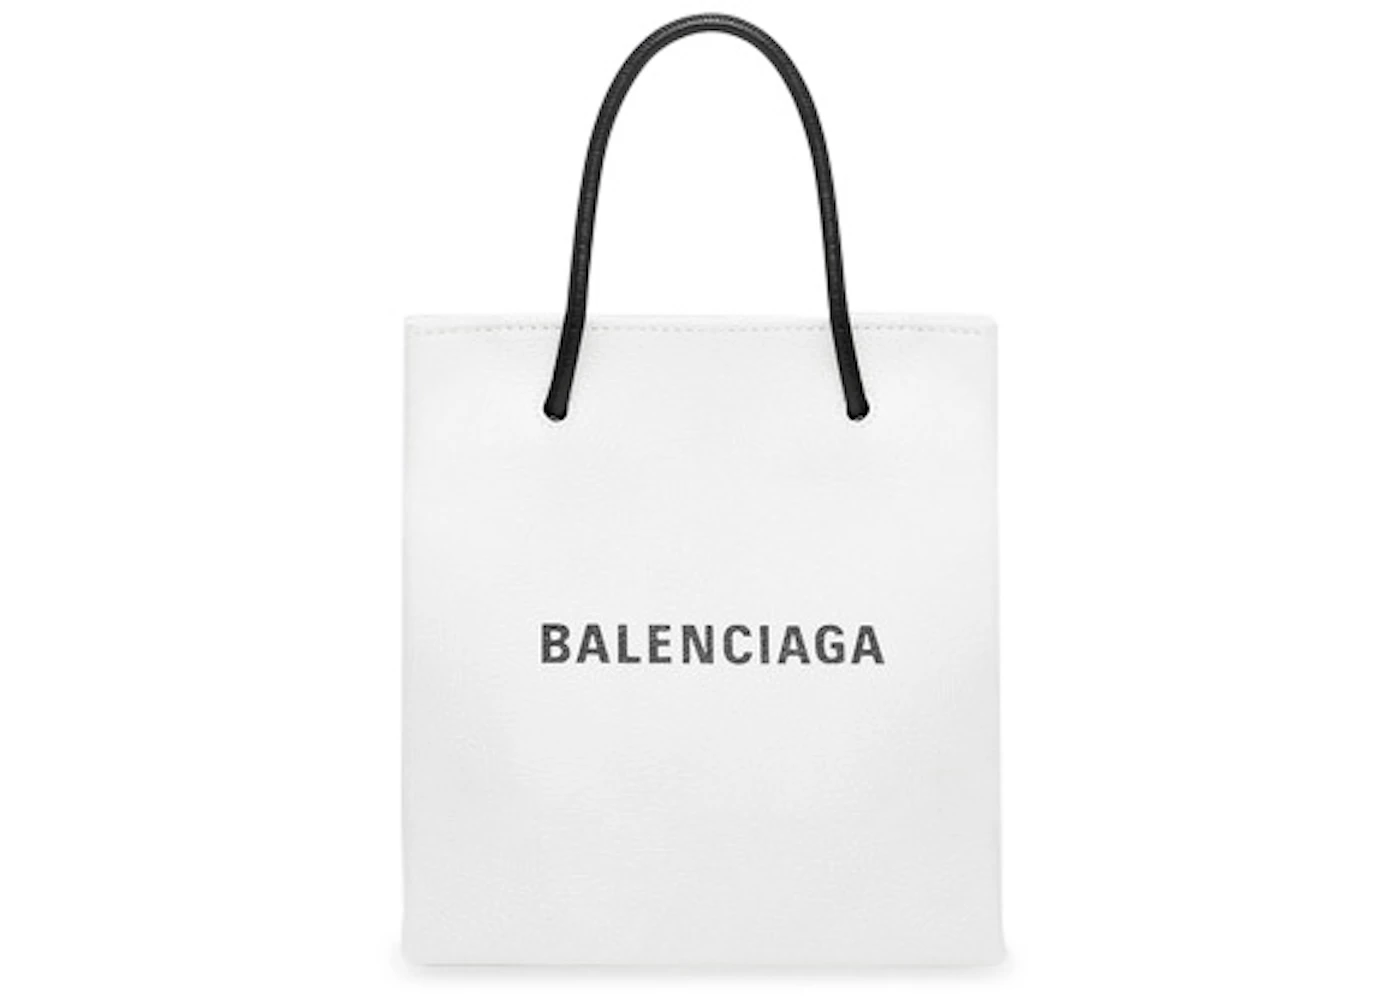 Balenciaga Shopping Tote XXS White/Black in Calfskin Leather with ...